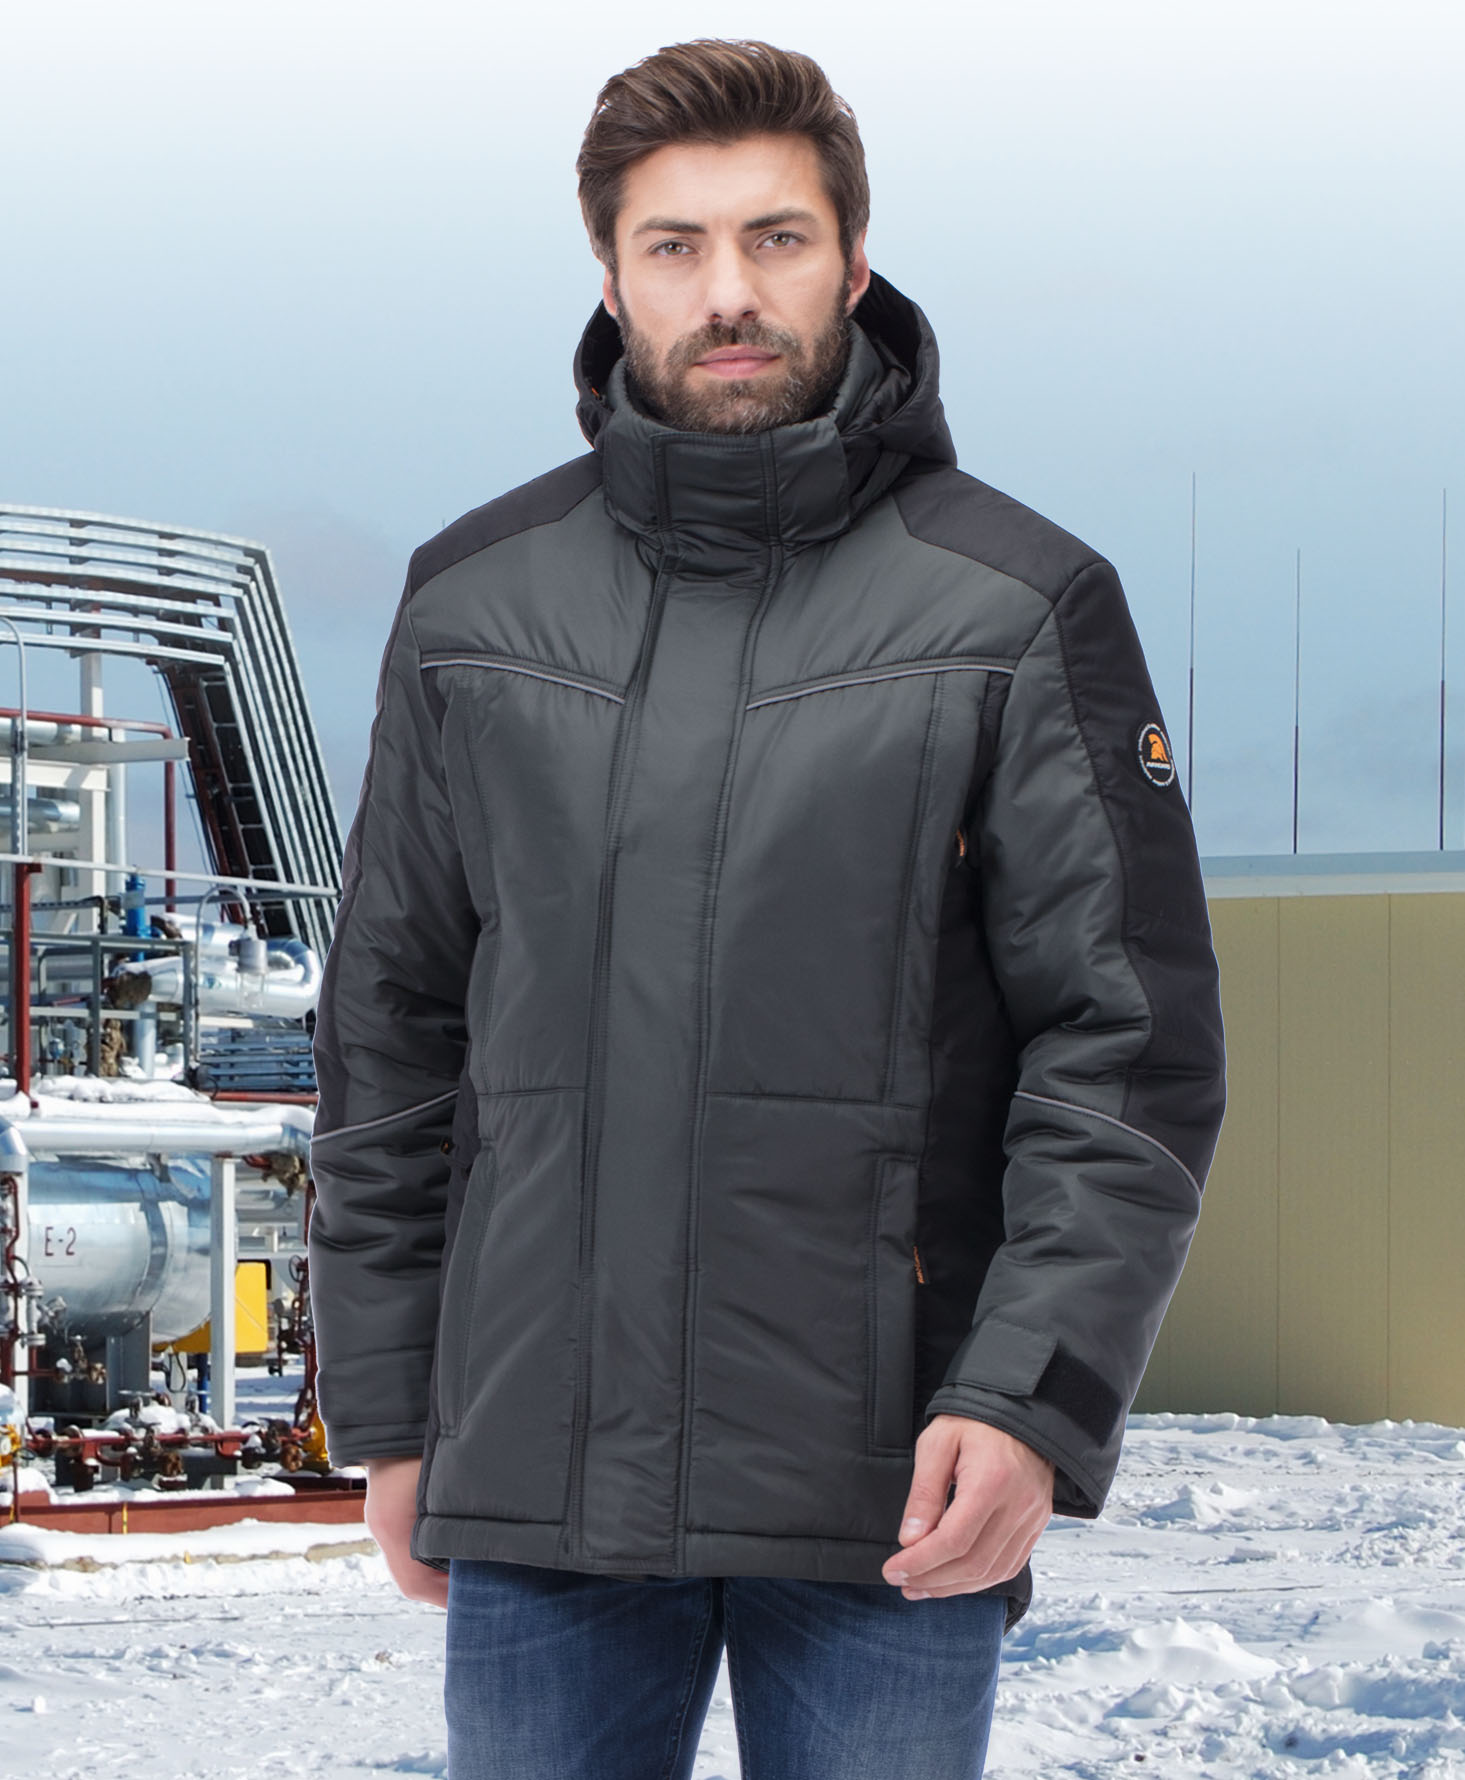 Зимняя куртка "КОРСАР" мужская, удлиненная, утепленная, цвет: серый с черным, ткань: 100% ПЭ